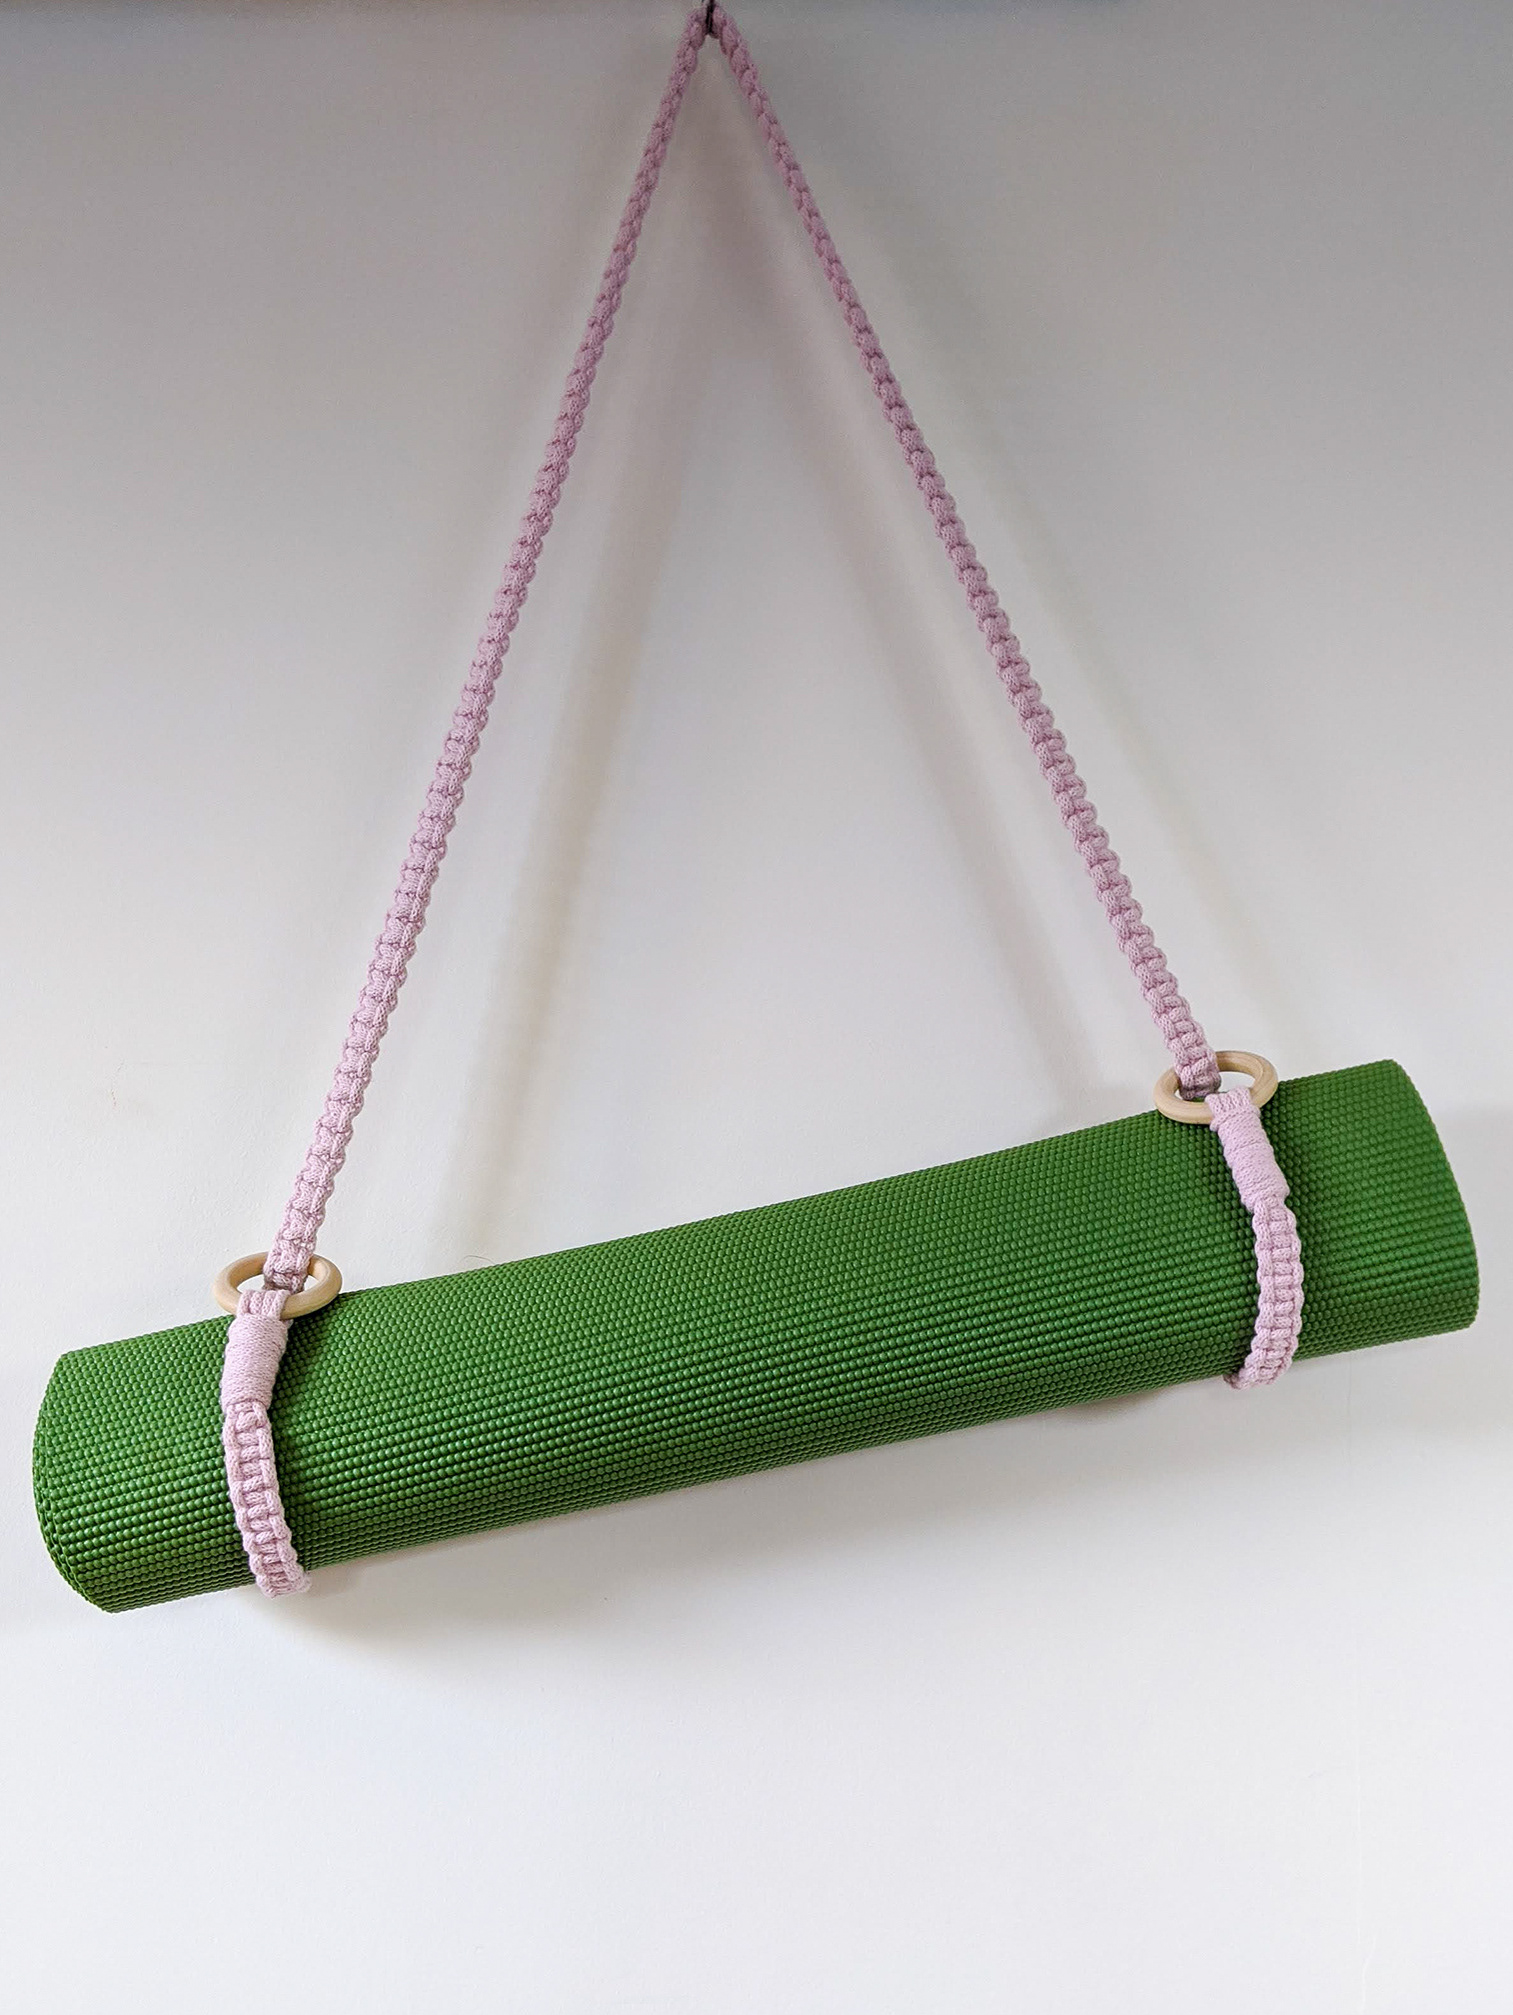 How to make a macrame yoga mat strap 